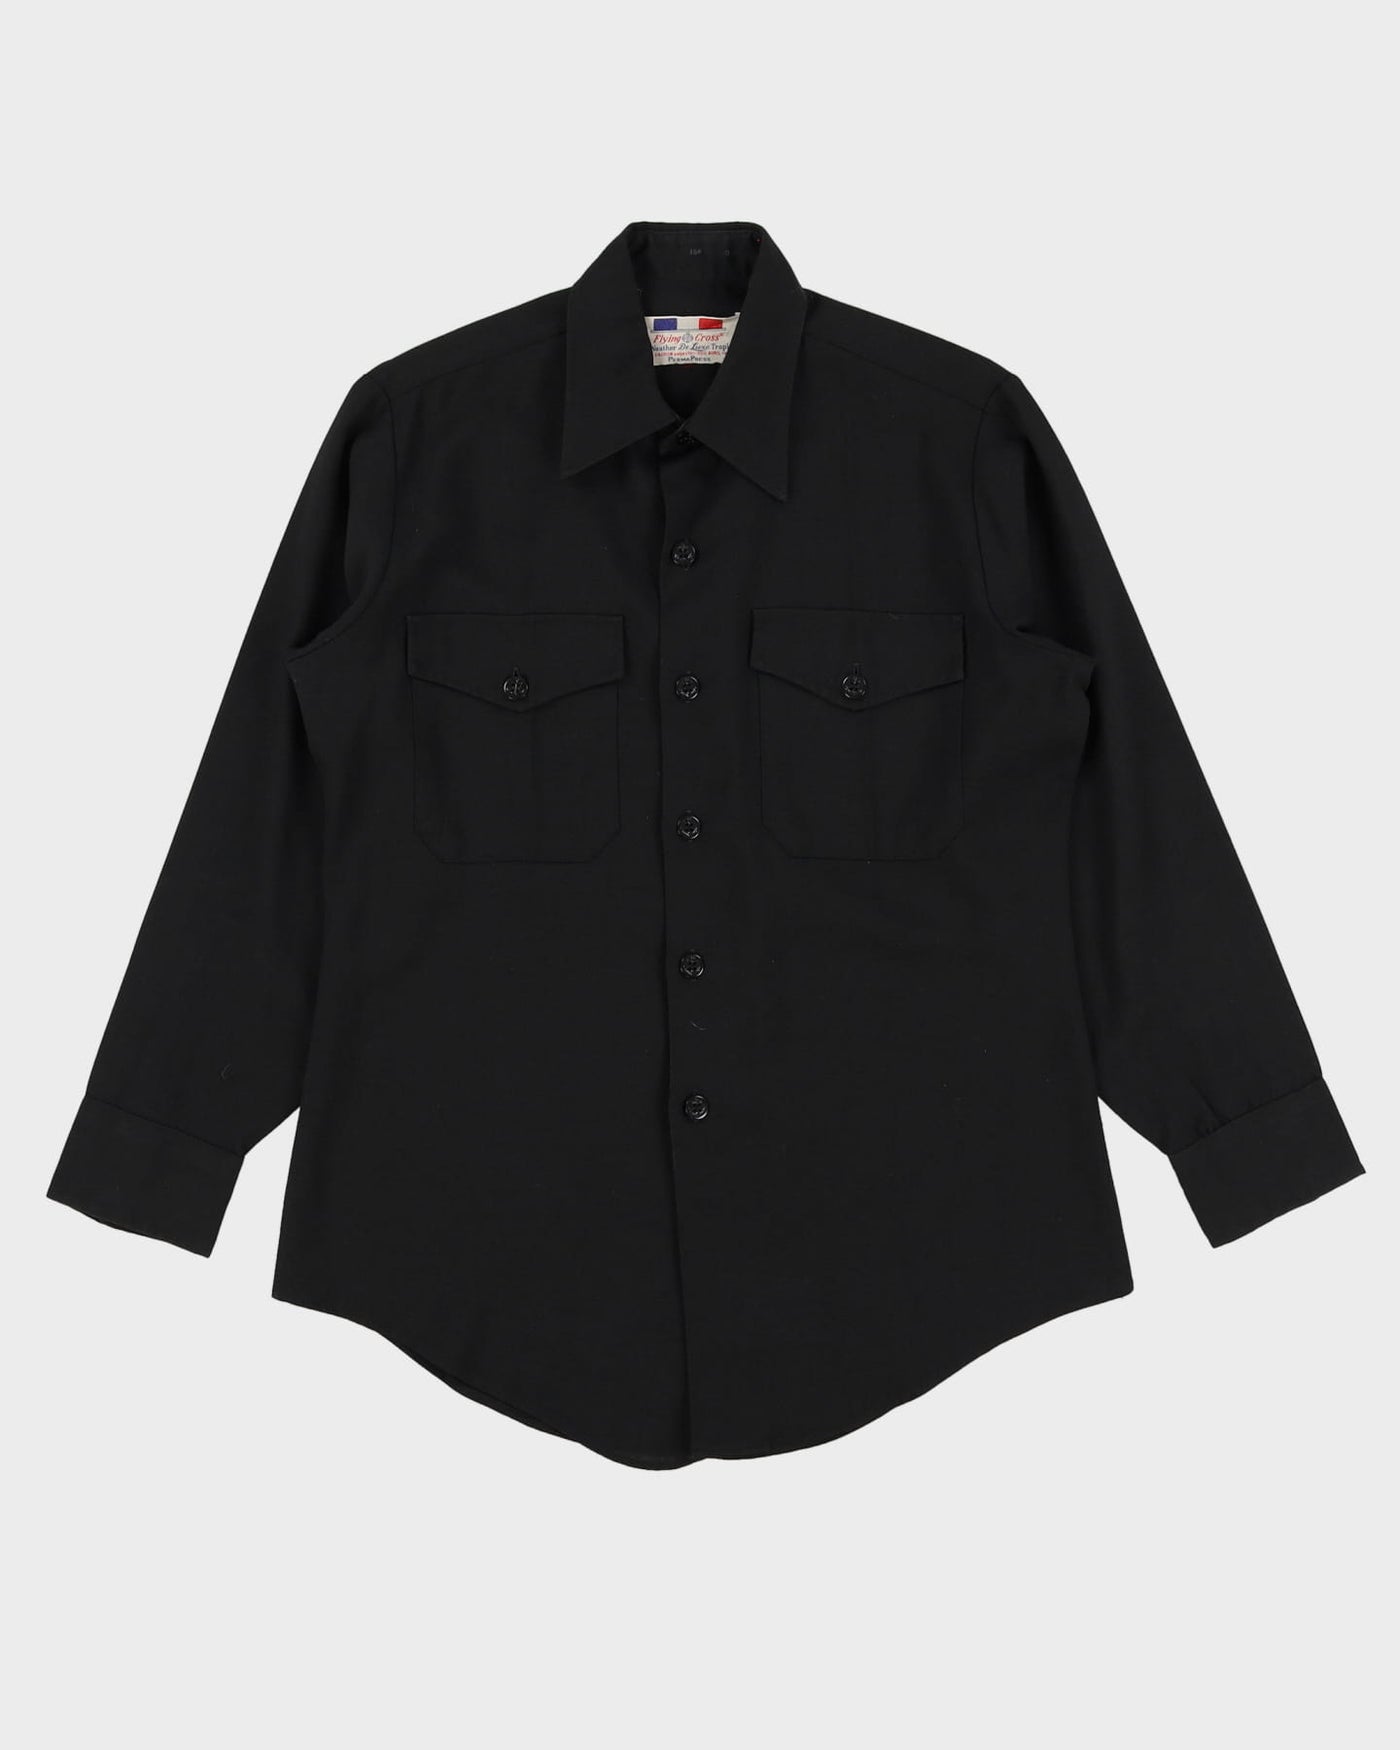 Vintage 1970s Black Workwear Shirt - L